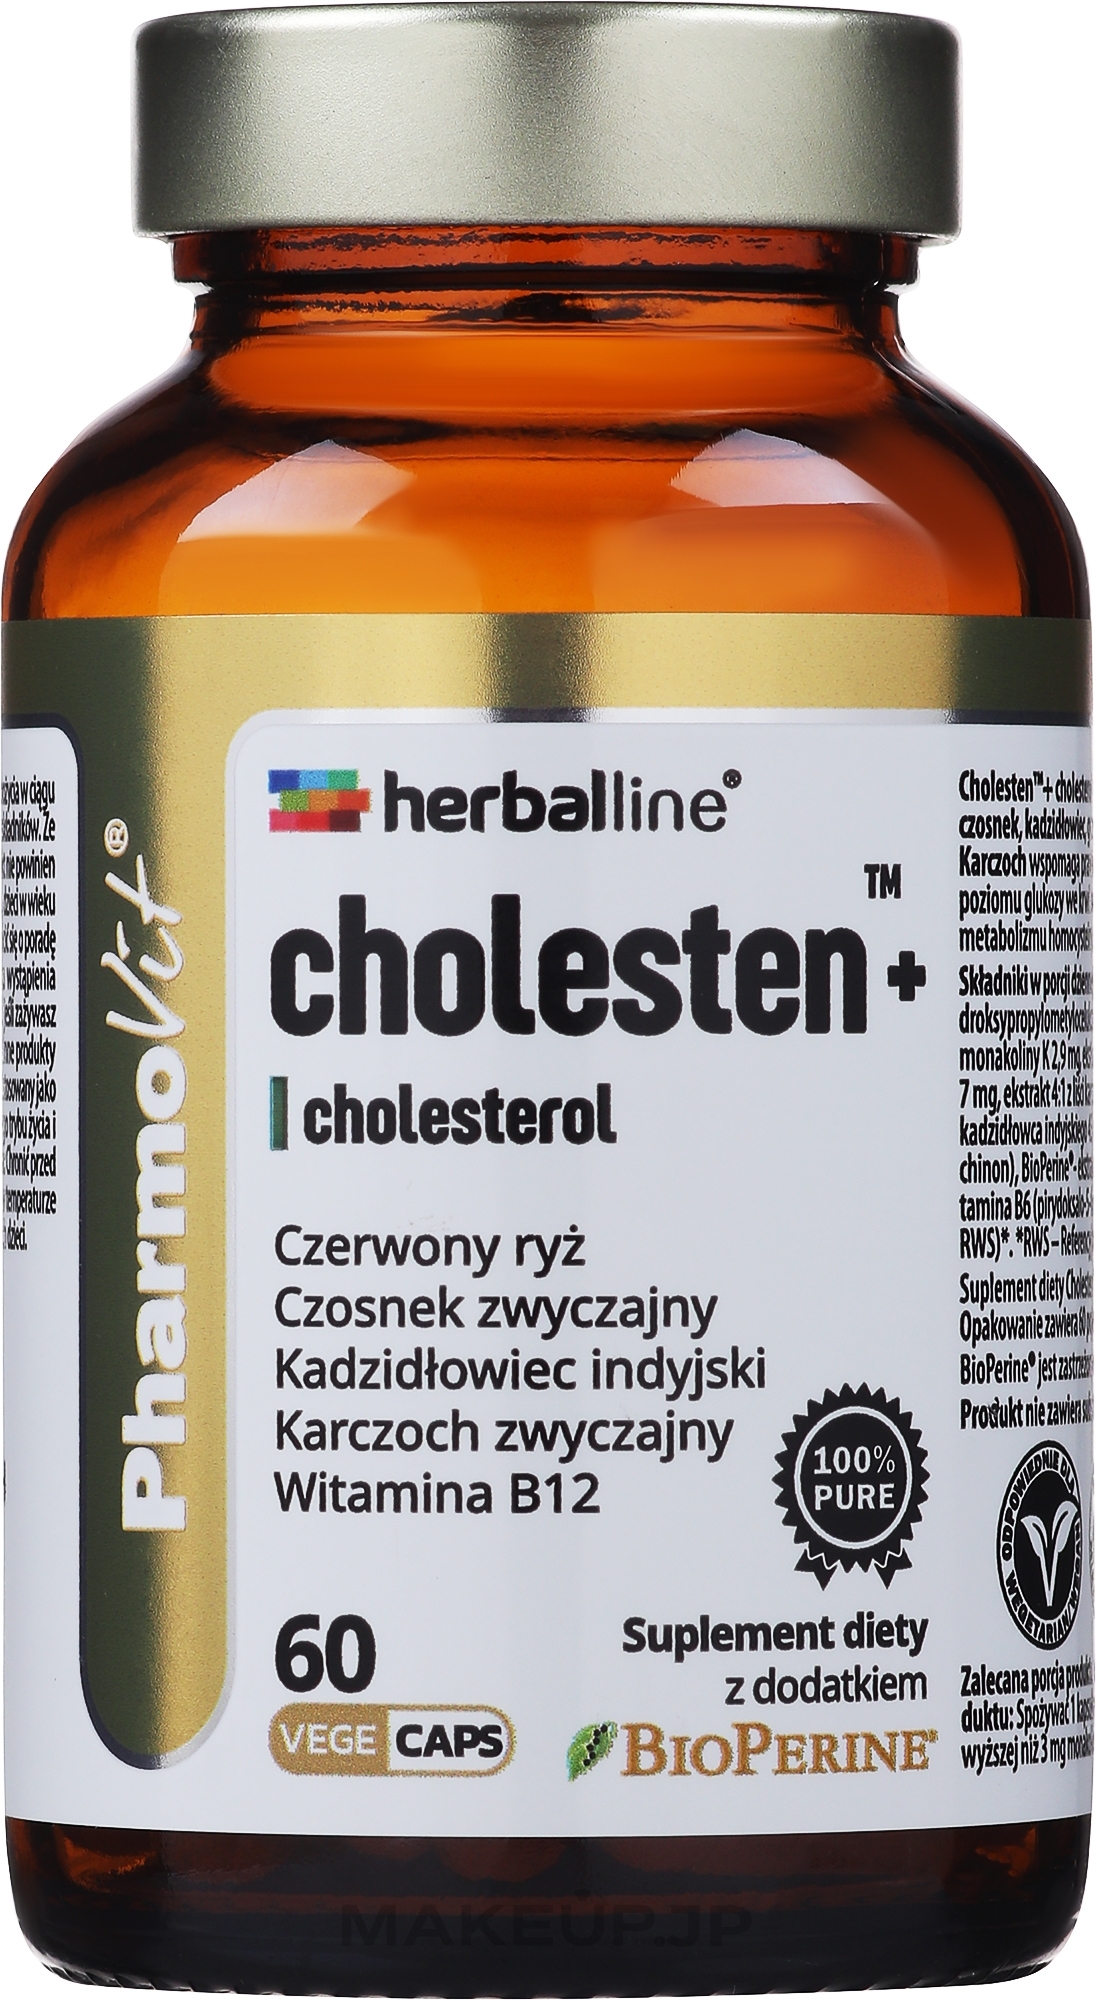 Dietary Supplement for Proper Cholesterol Levels, 60pcs - Pharmovit Herballine — photo 60 szt.